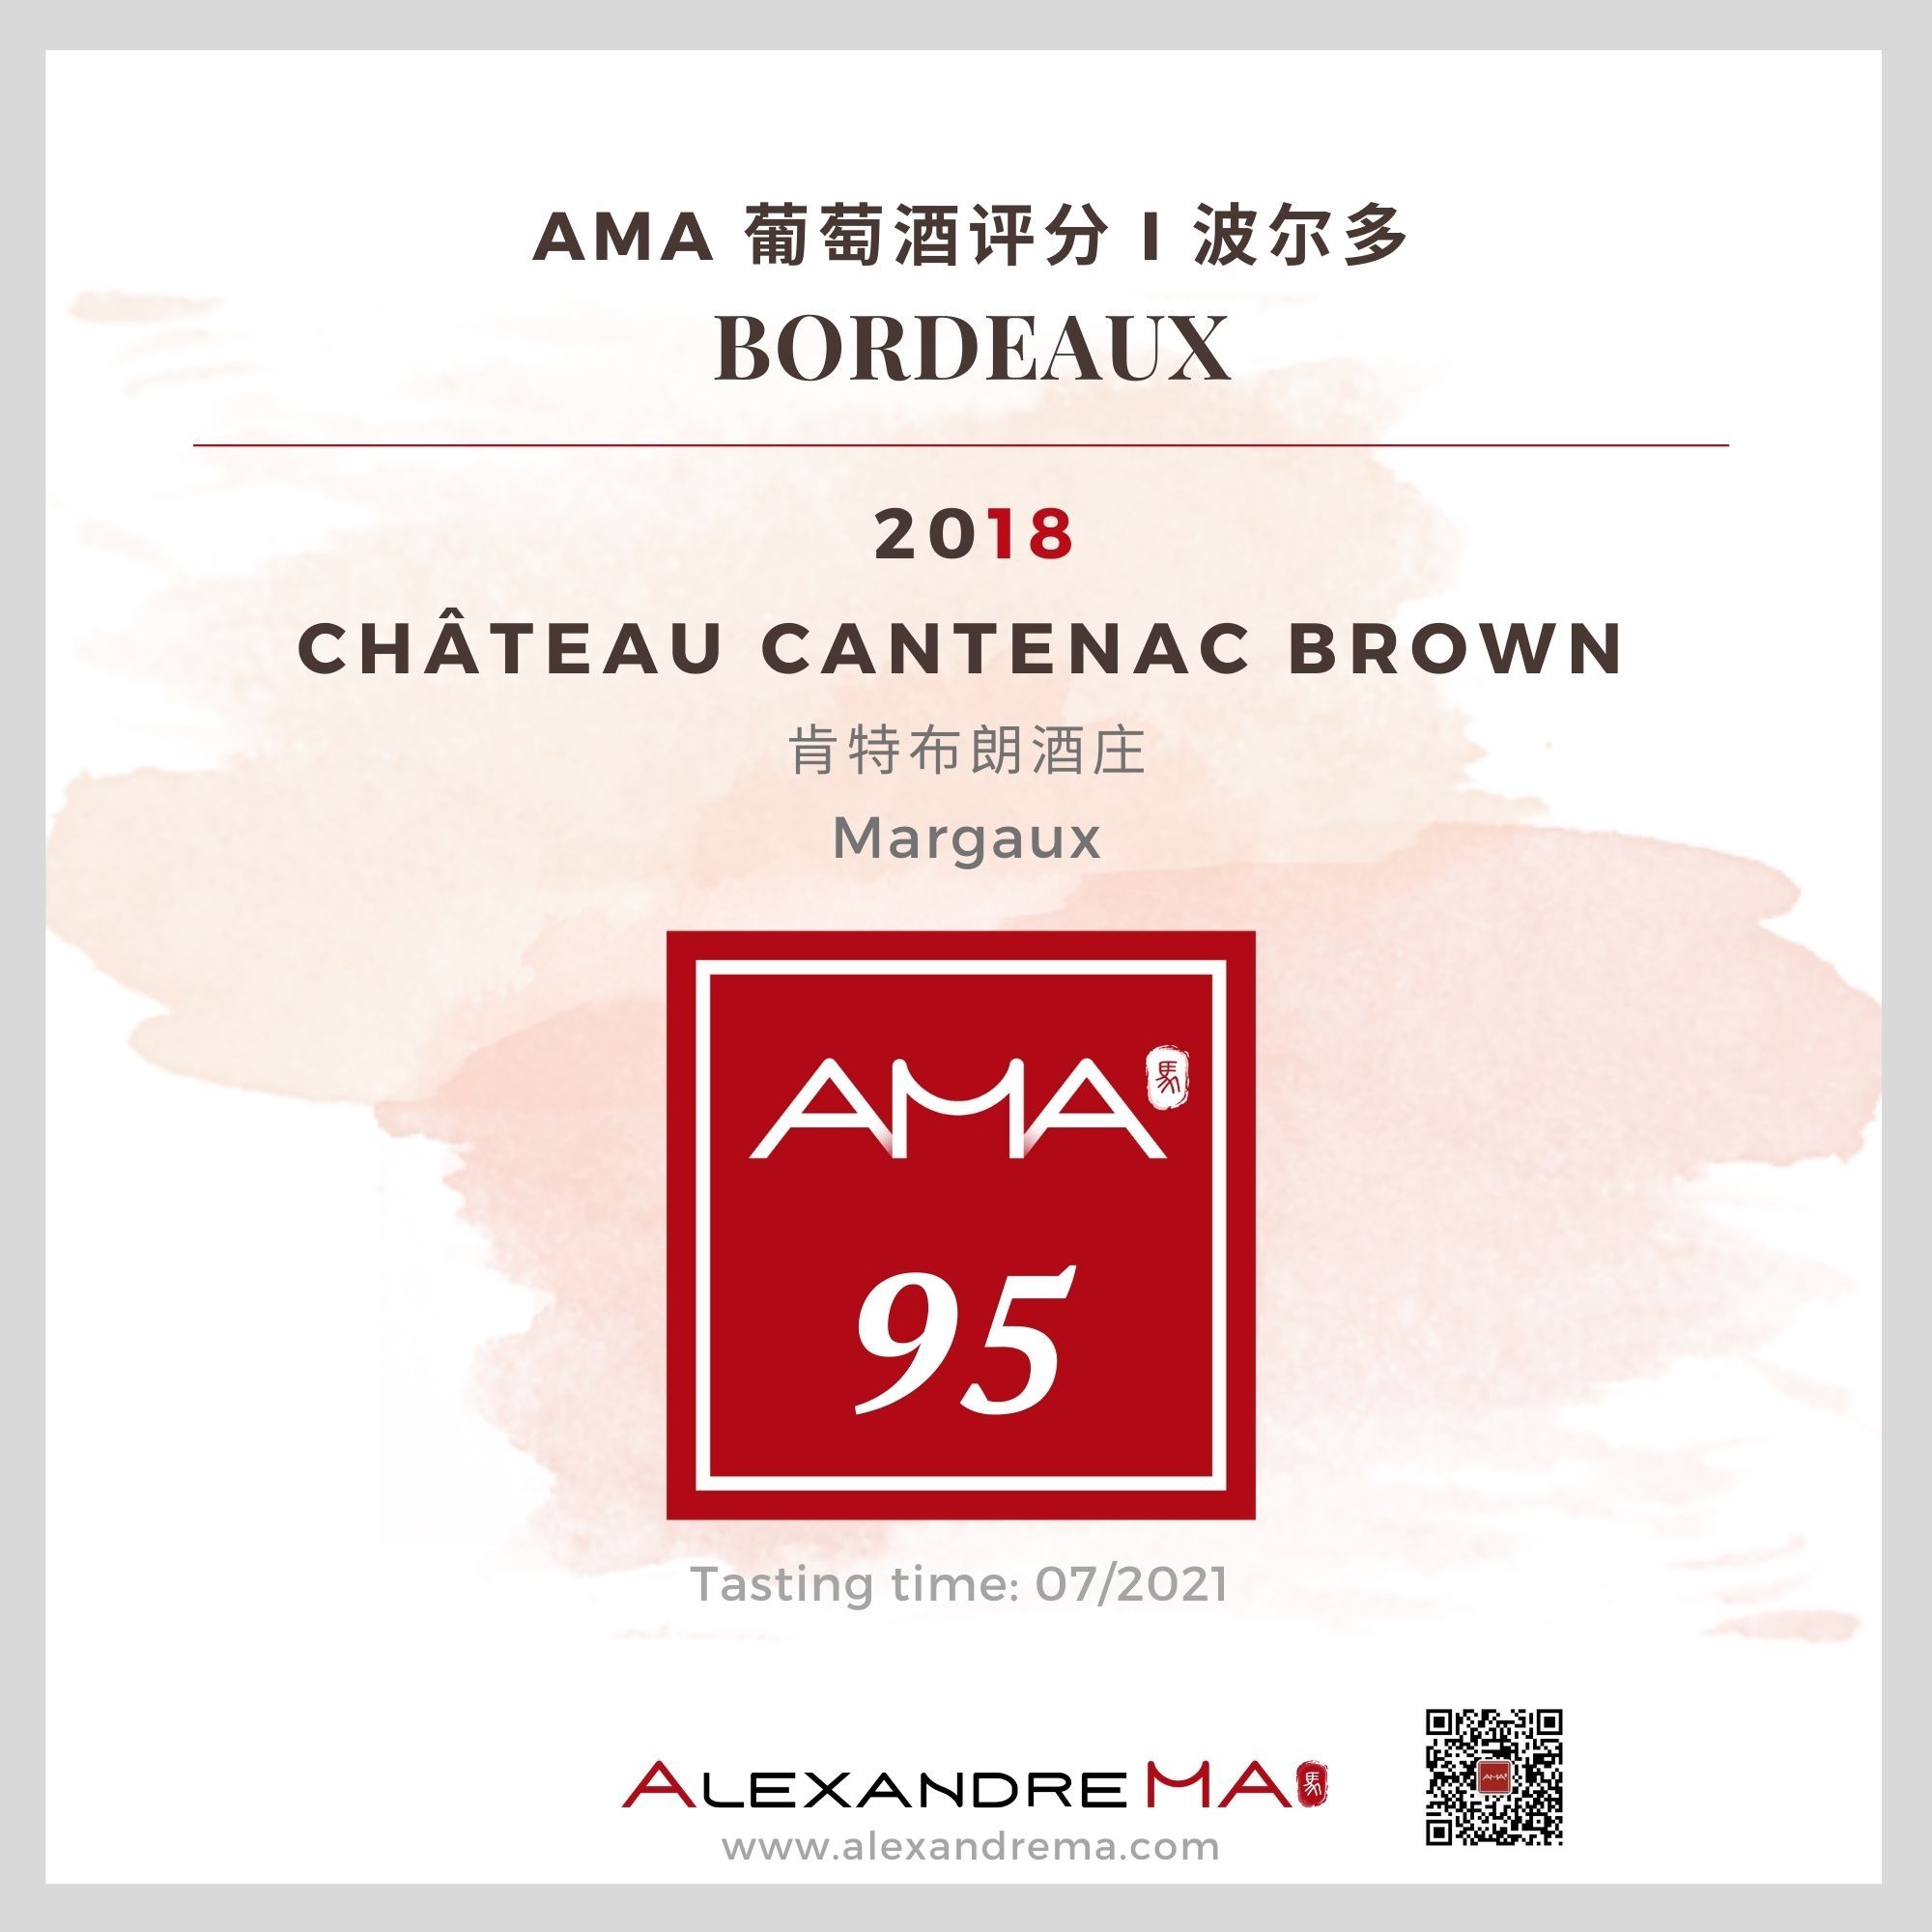 Château Cantenac Brown 2018 肯特布朗酒庄 - Alexandre Ma